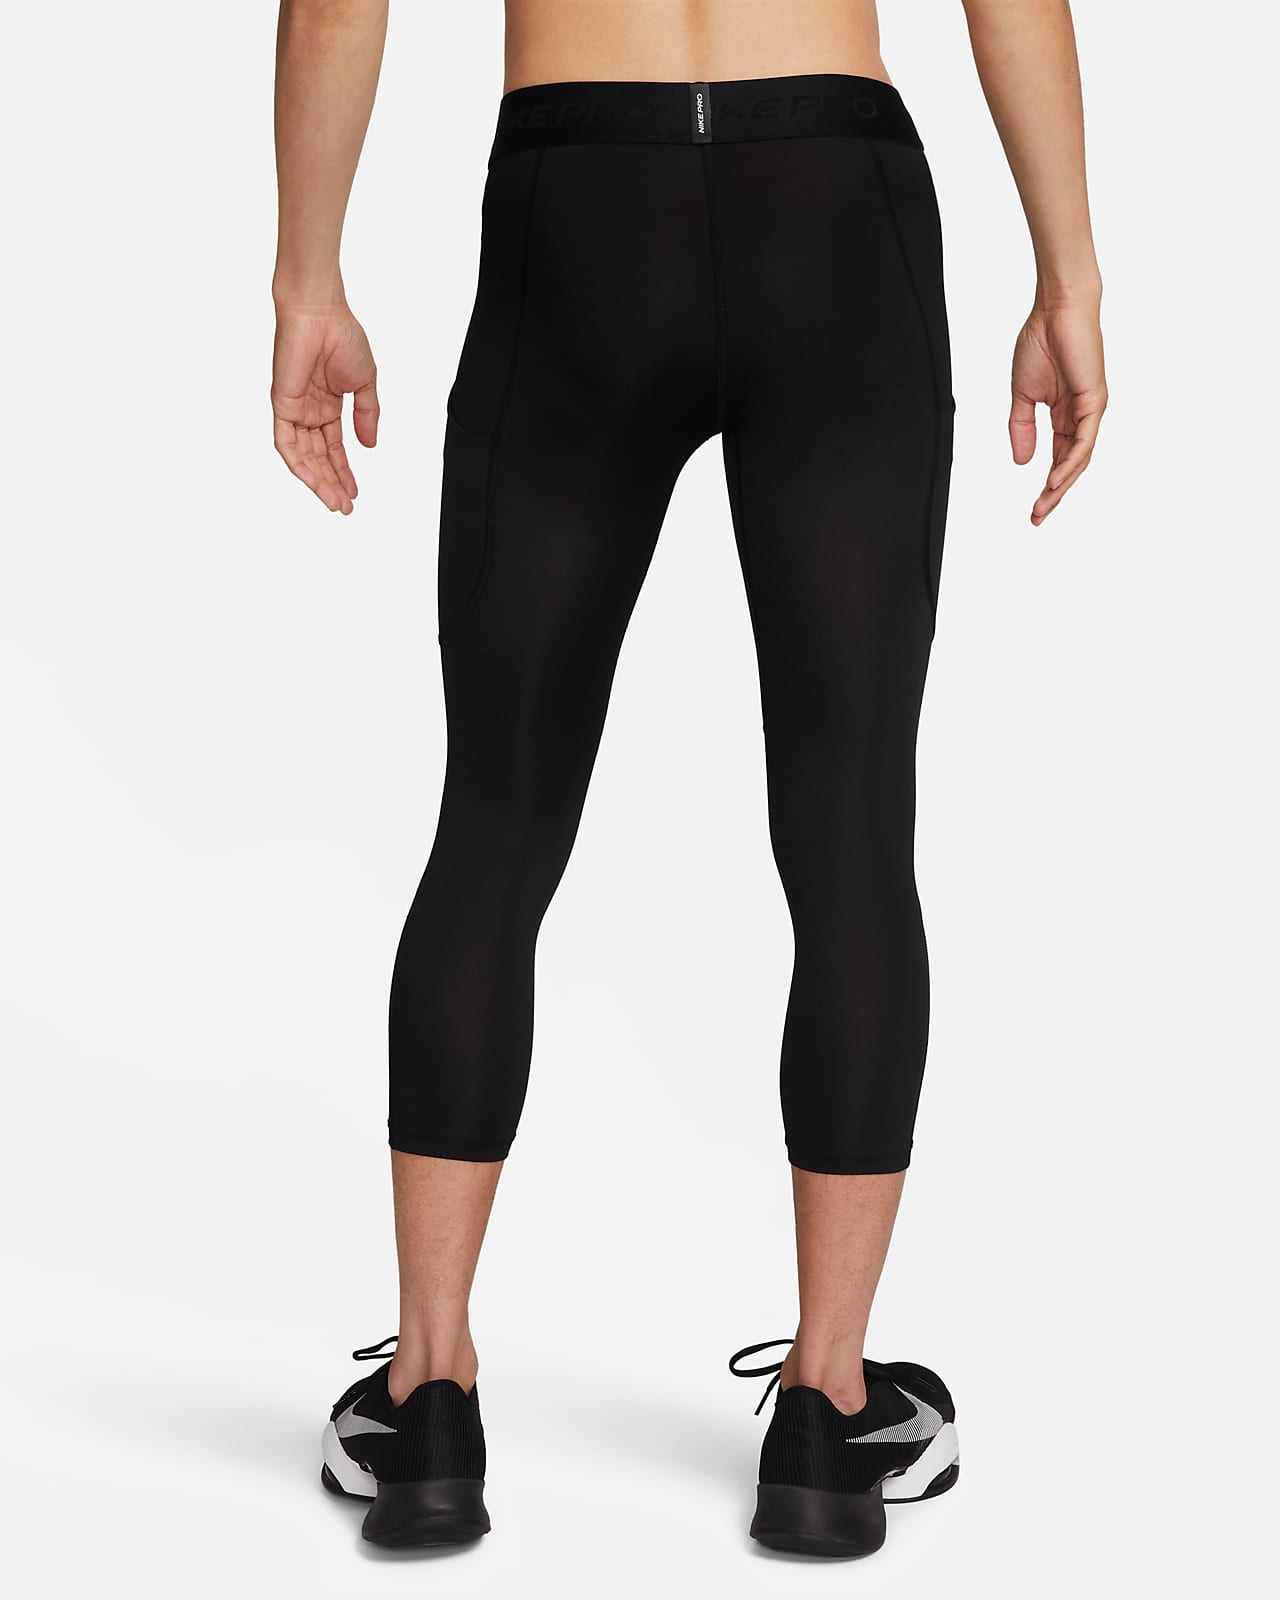 Nike, Pants, Nba Nike Pro Compression Leggings Size Large